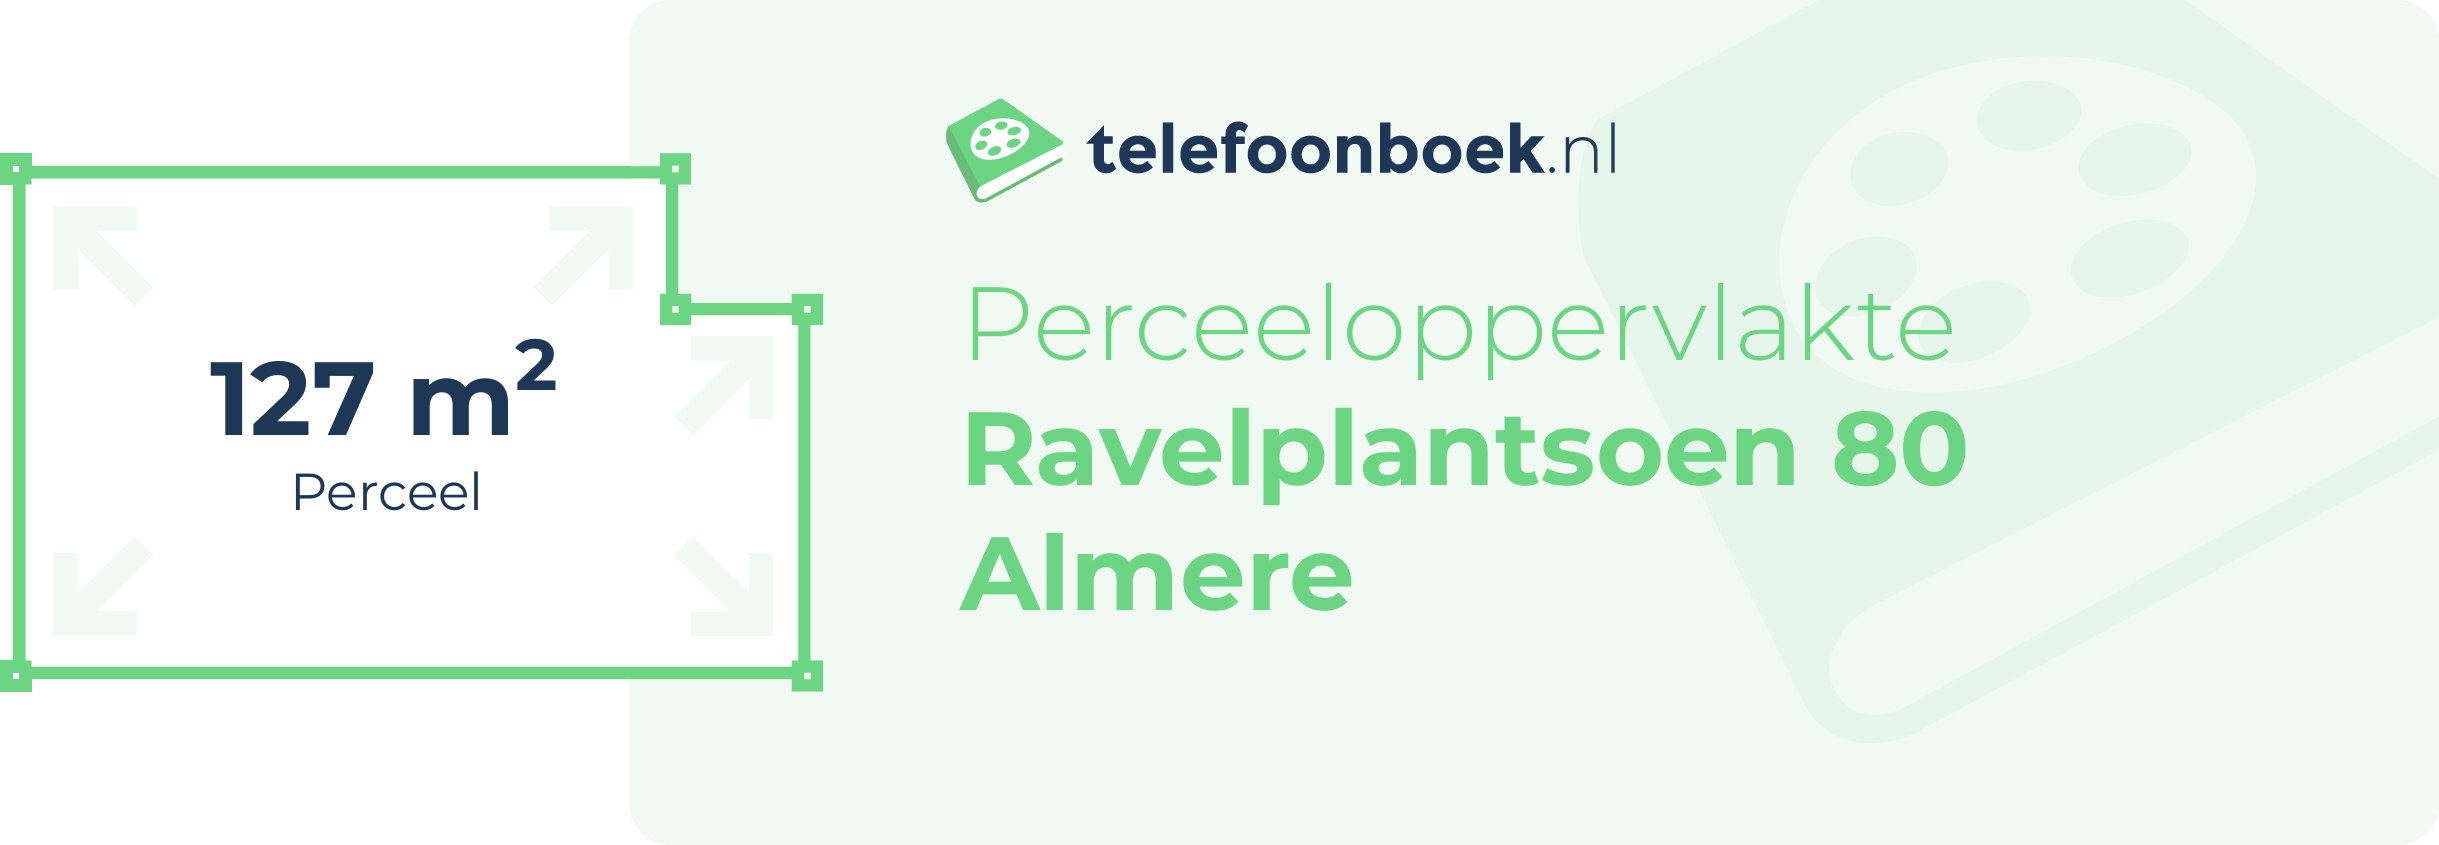 Perceeloppervlakte Ravelplantsoen 80 Almere